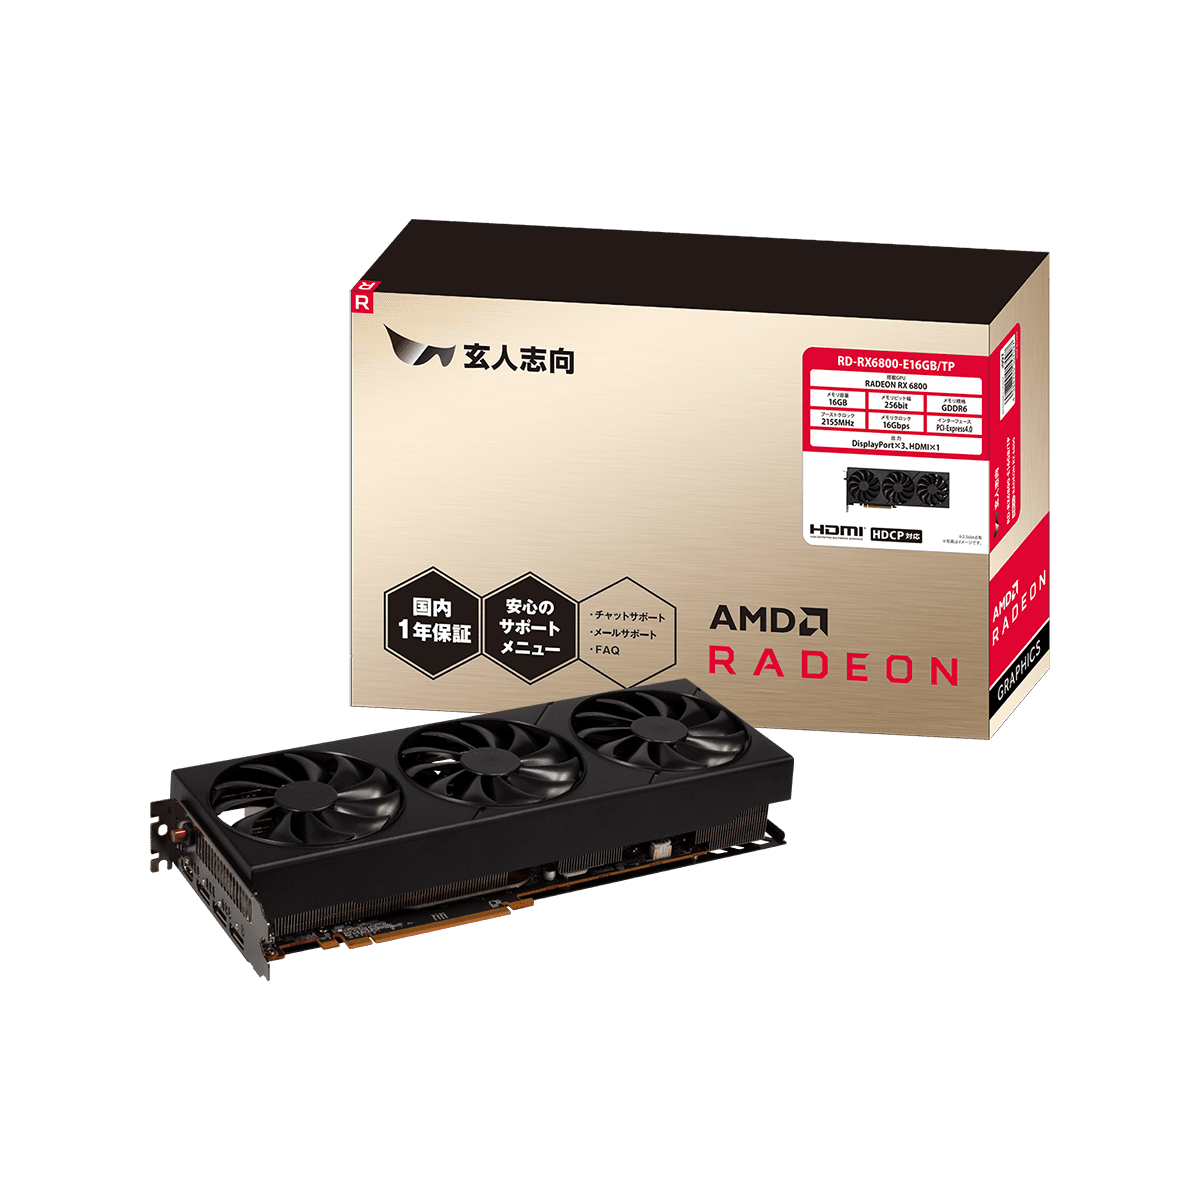 RD-RX6800-E16GB/TP | Radeon RX 6800 搭載 グラフィックボード (PCI